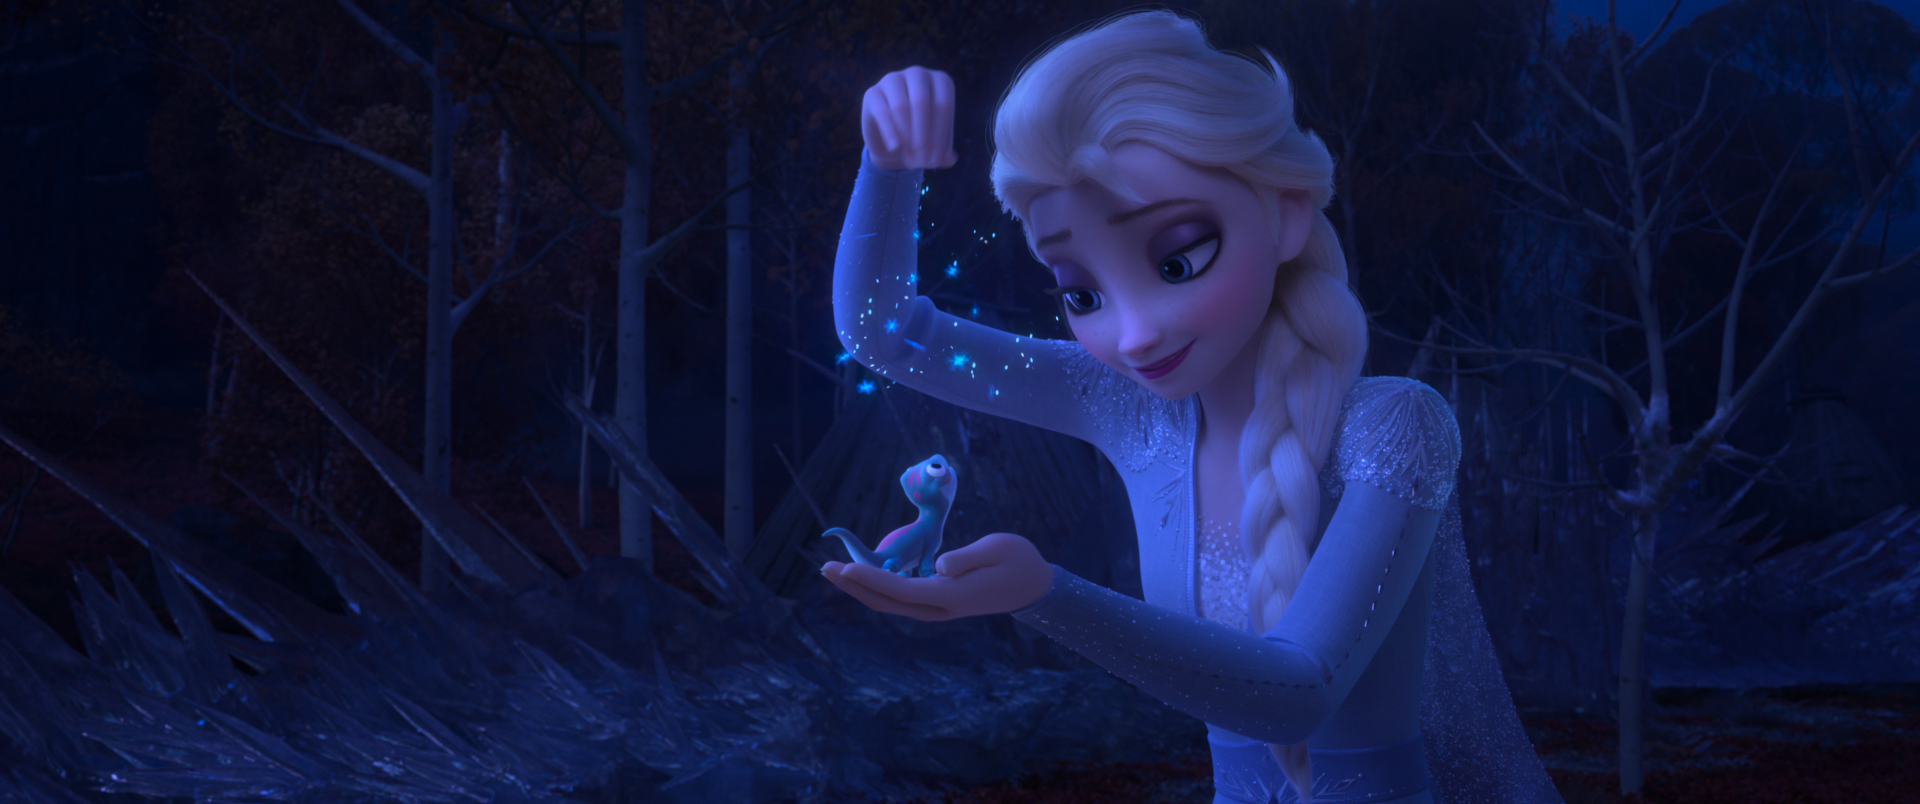 NEW Disney’s Frozen 2 Trailer